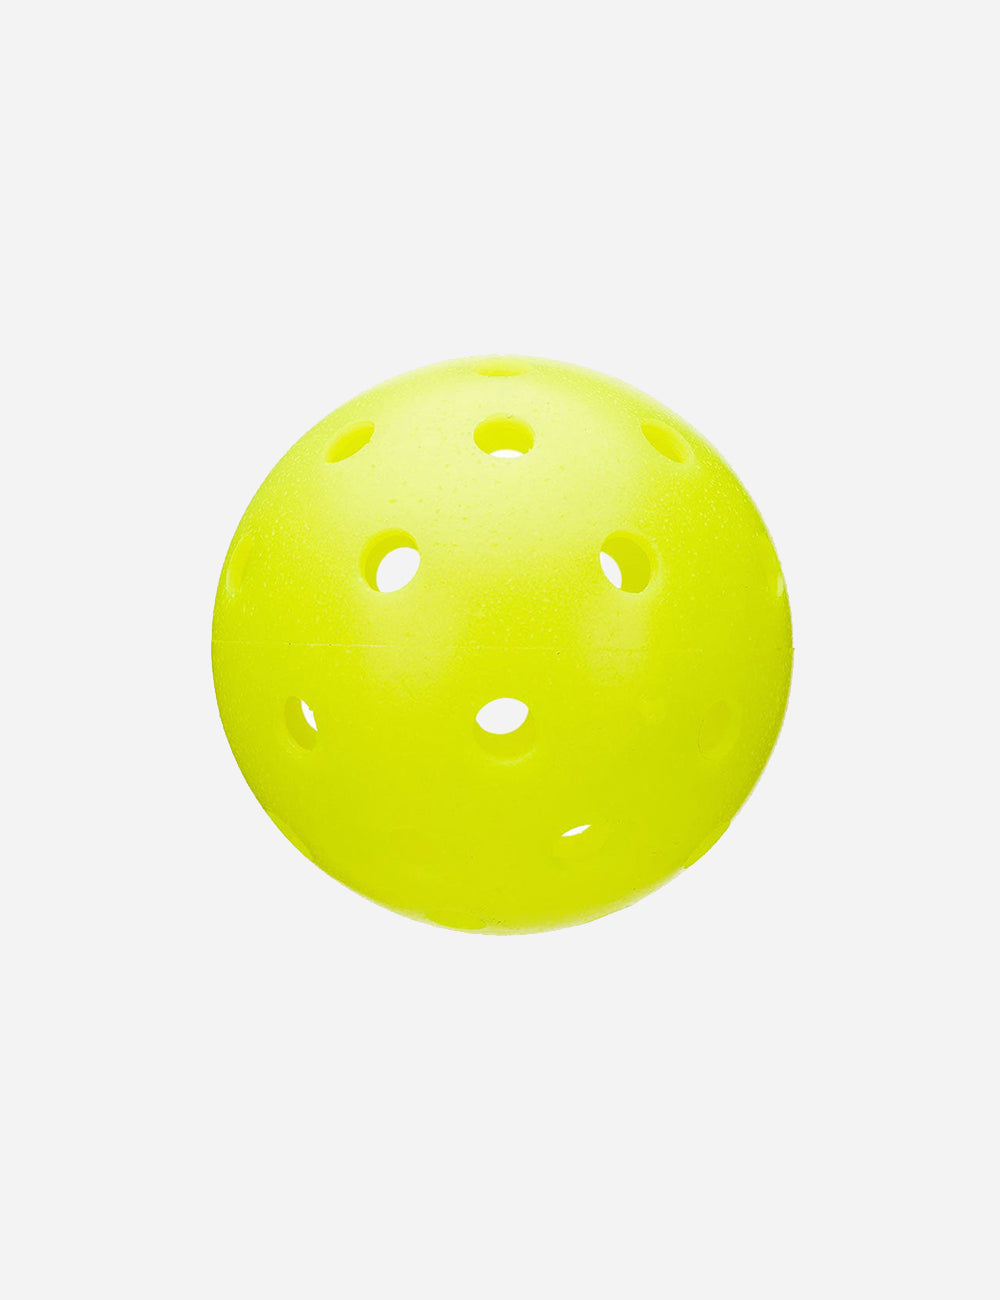 Franklin X-40 Outdoor Pickleball Ball - optic yellow tournament pickleball ball